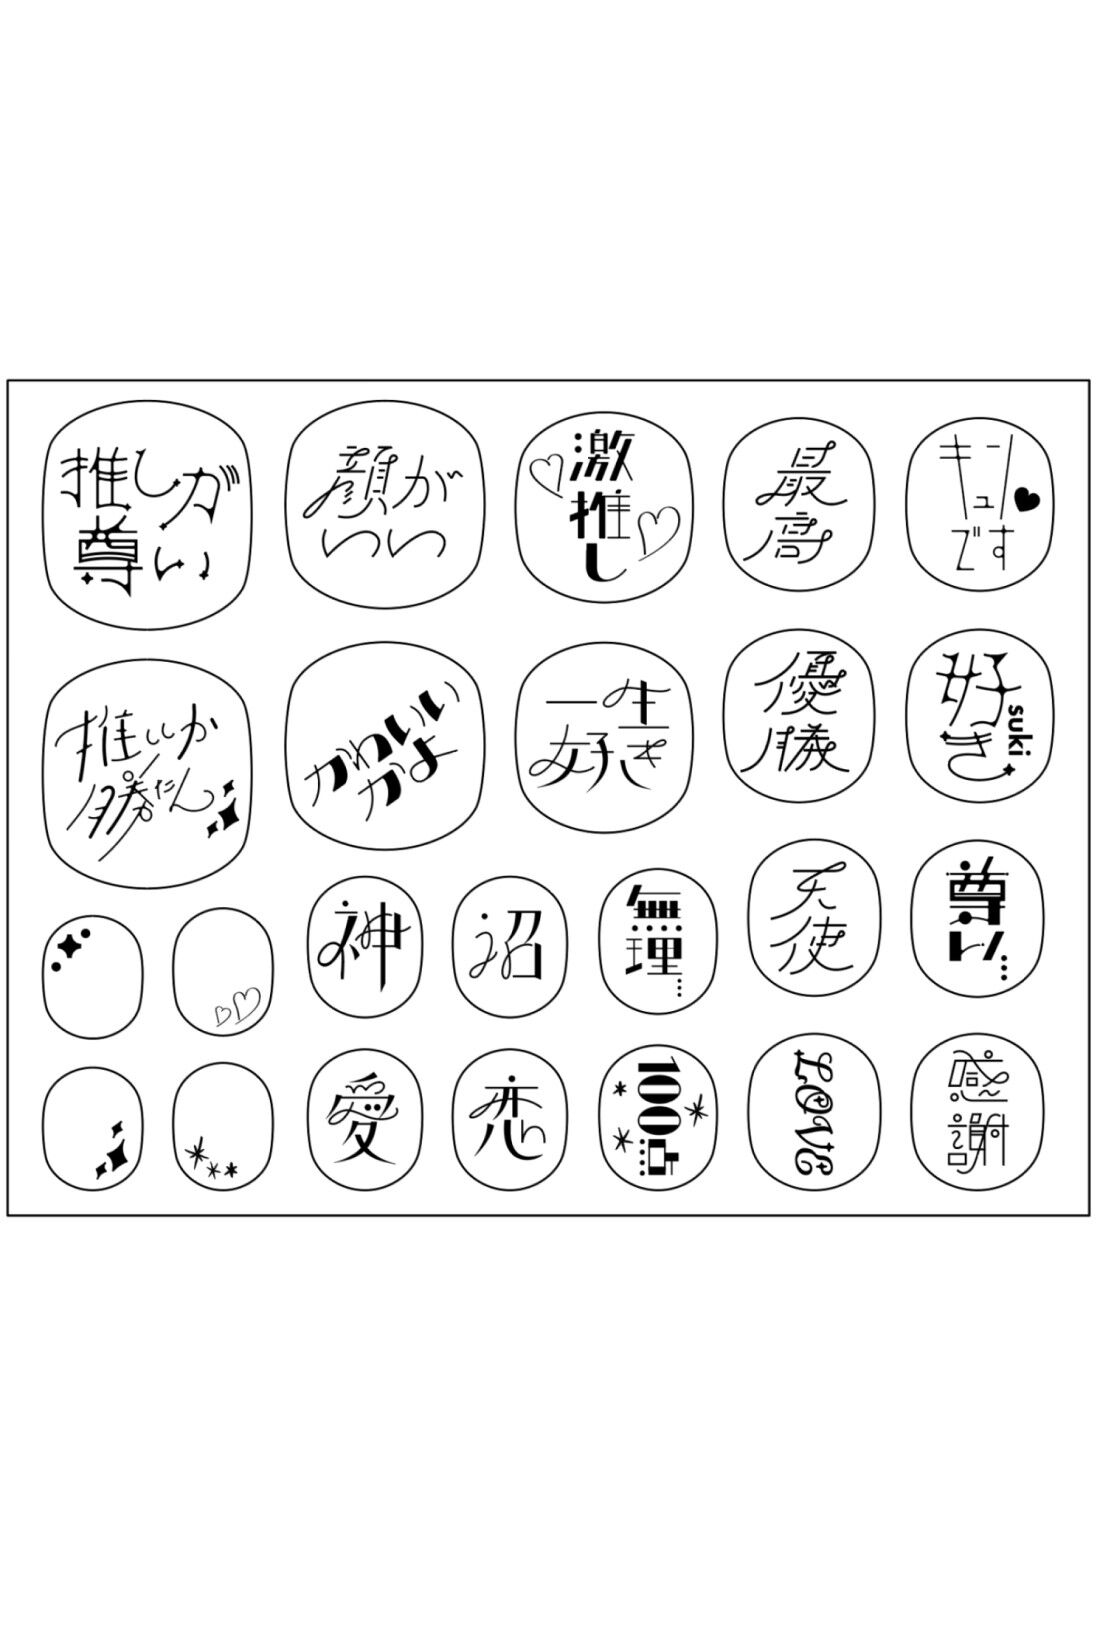 OSYAIRO|OSYAIRO　ときめく推し文字ネイルシール〈シルバー〉|文字のデザインはこちら。それぞれのワードに合ったデザインを考えました。